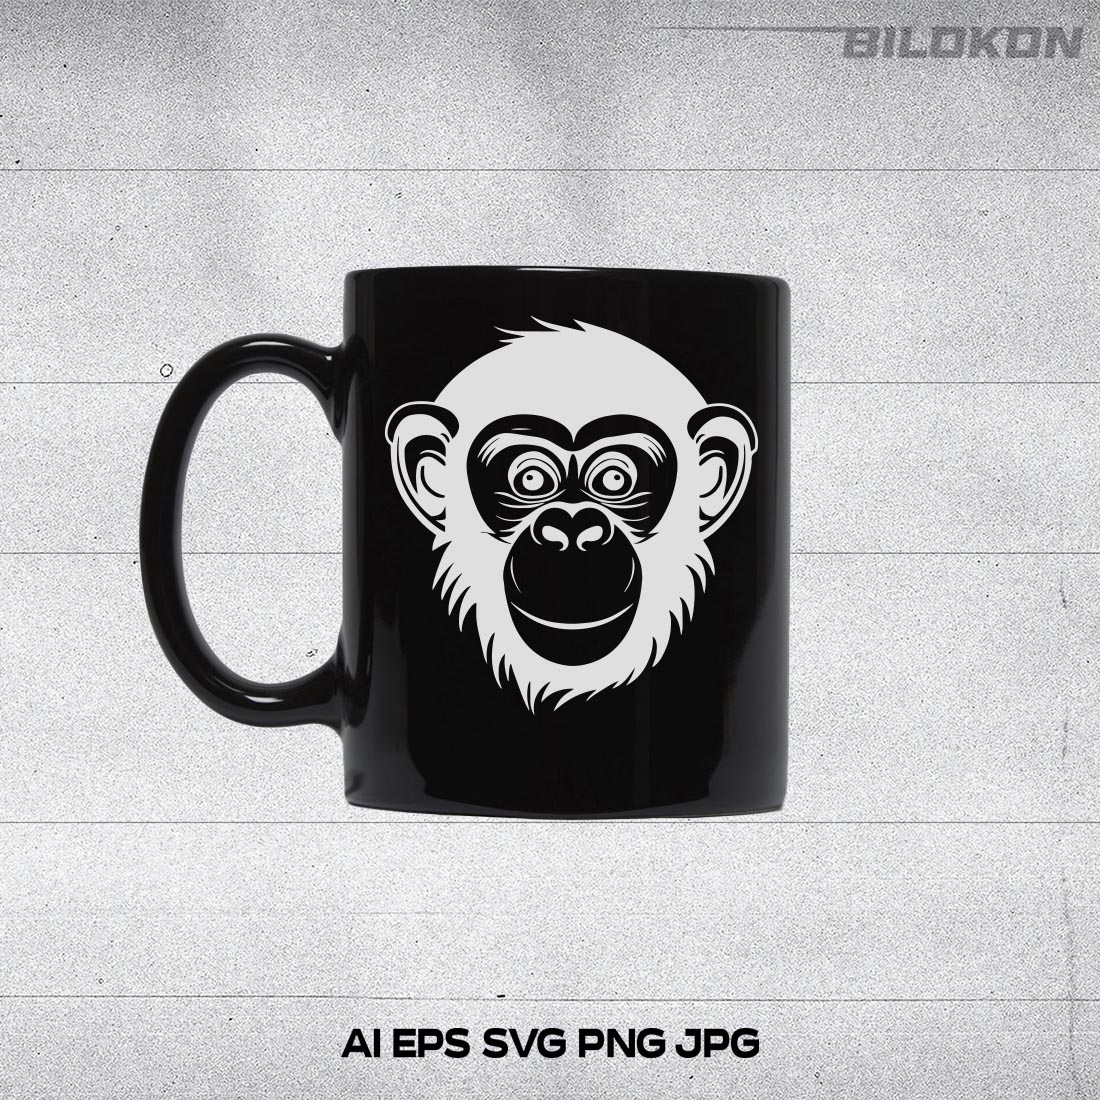 Black coffee mug with a monkey face on it.